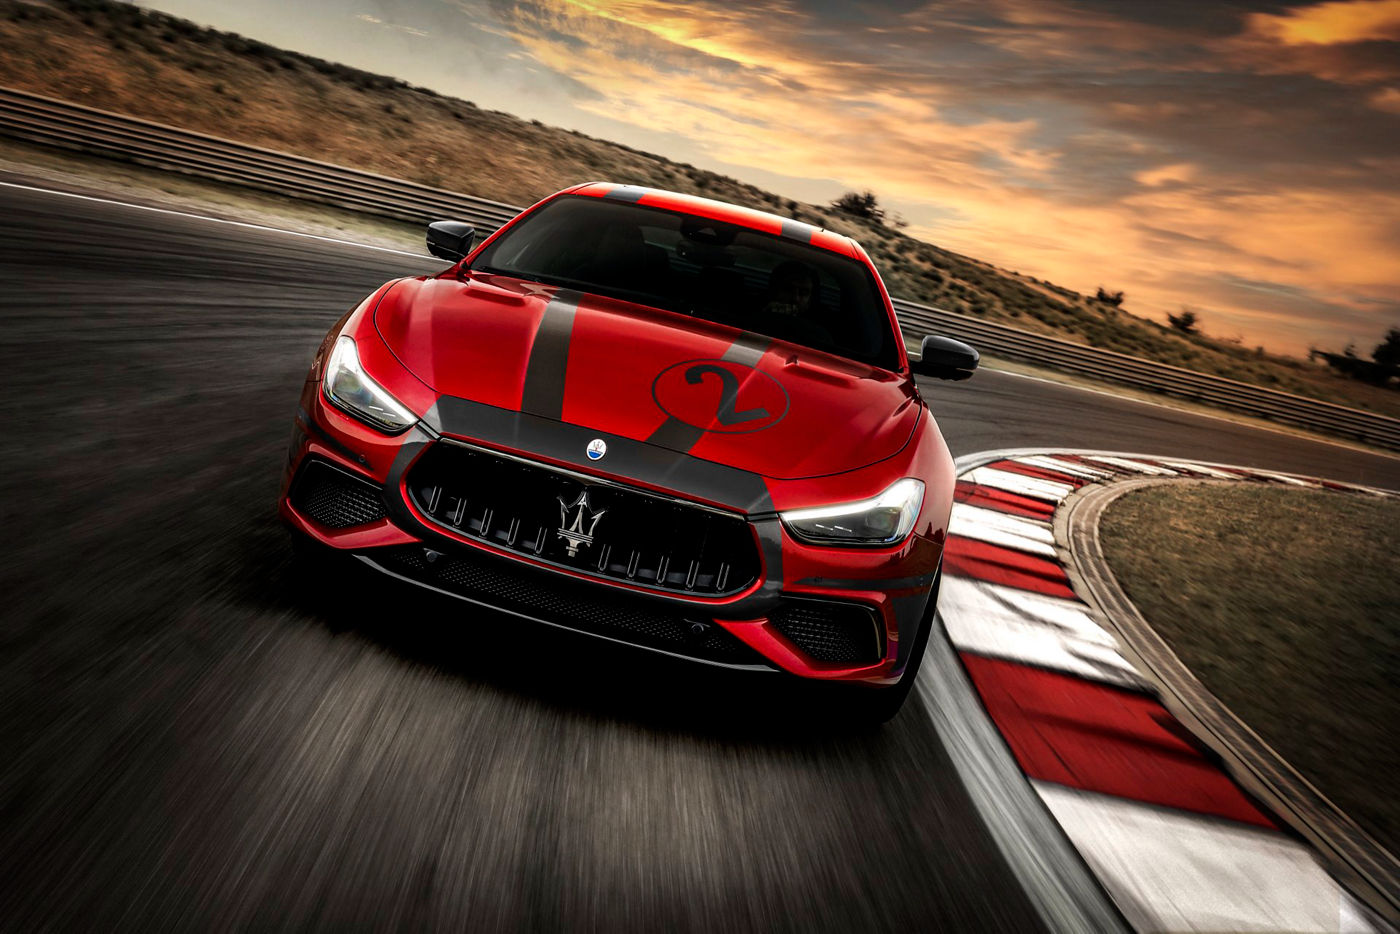 Red Maserati GranTurismo in motion on the street